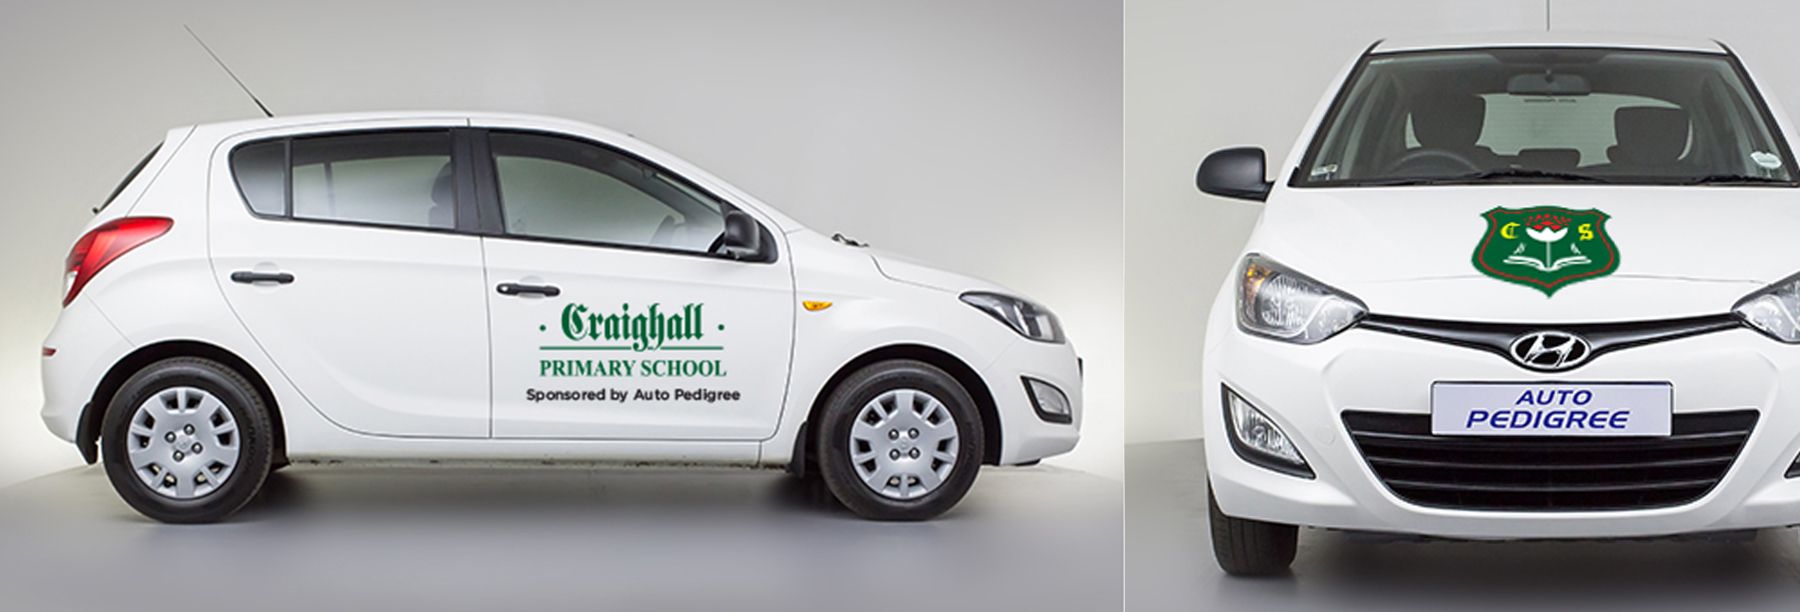 A Hyundai i20 for Craighall Primary School | Auto Pedigree